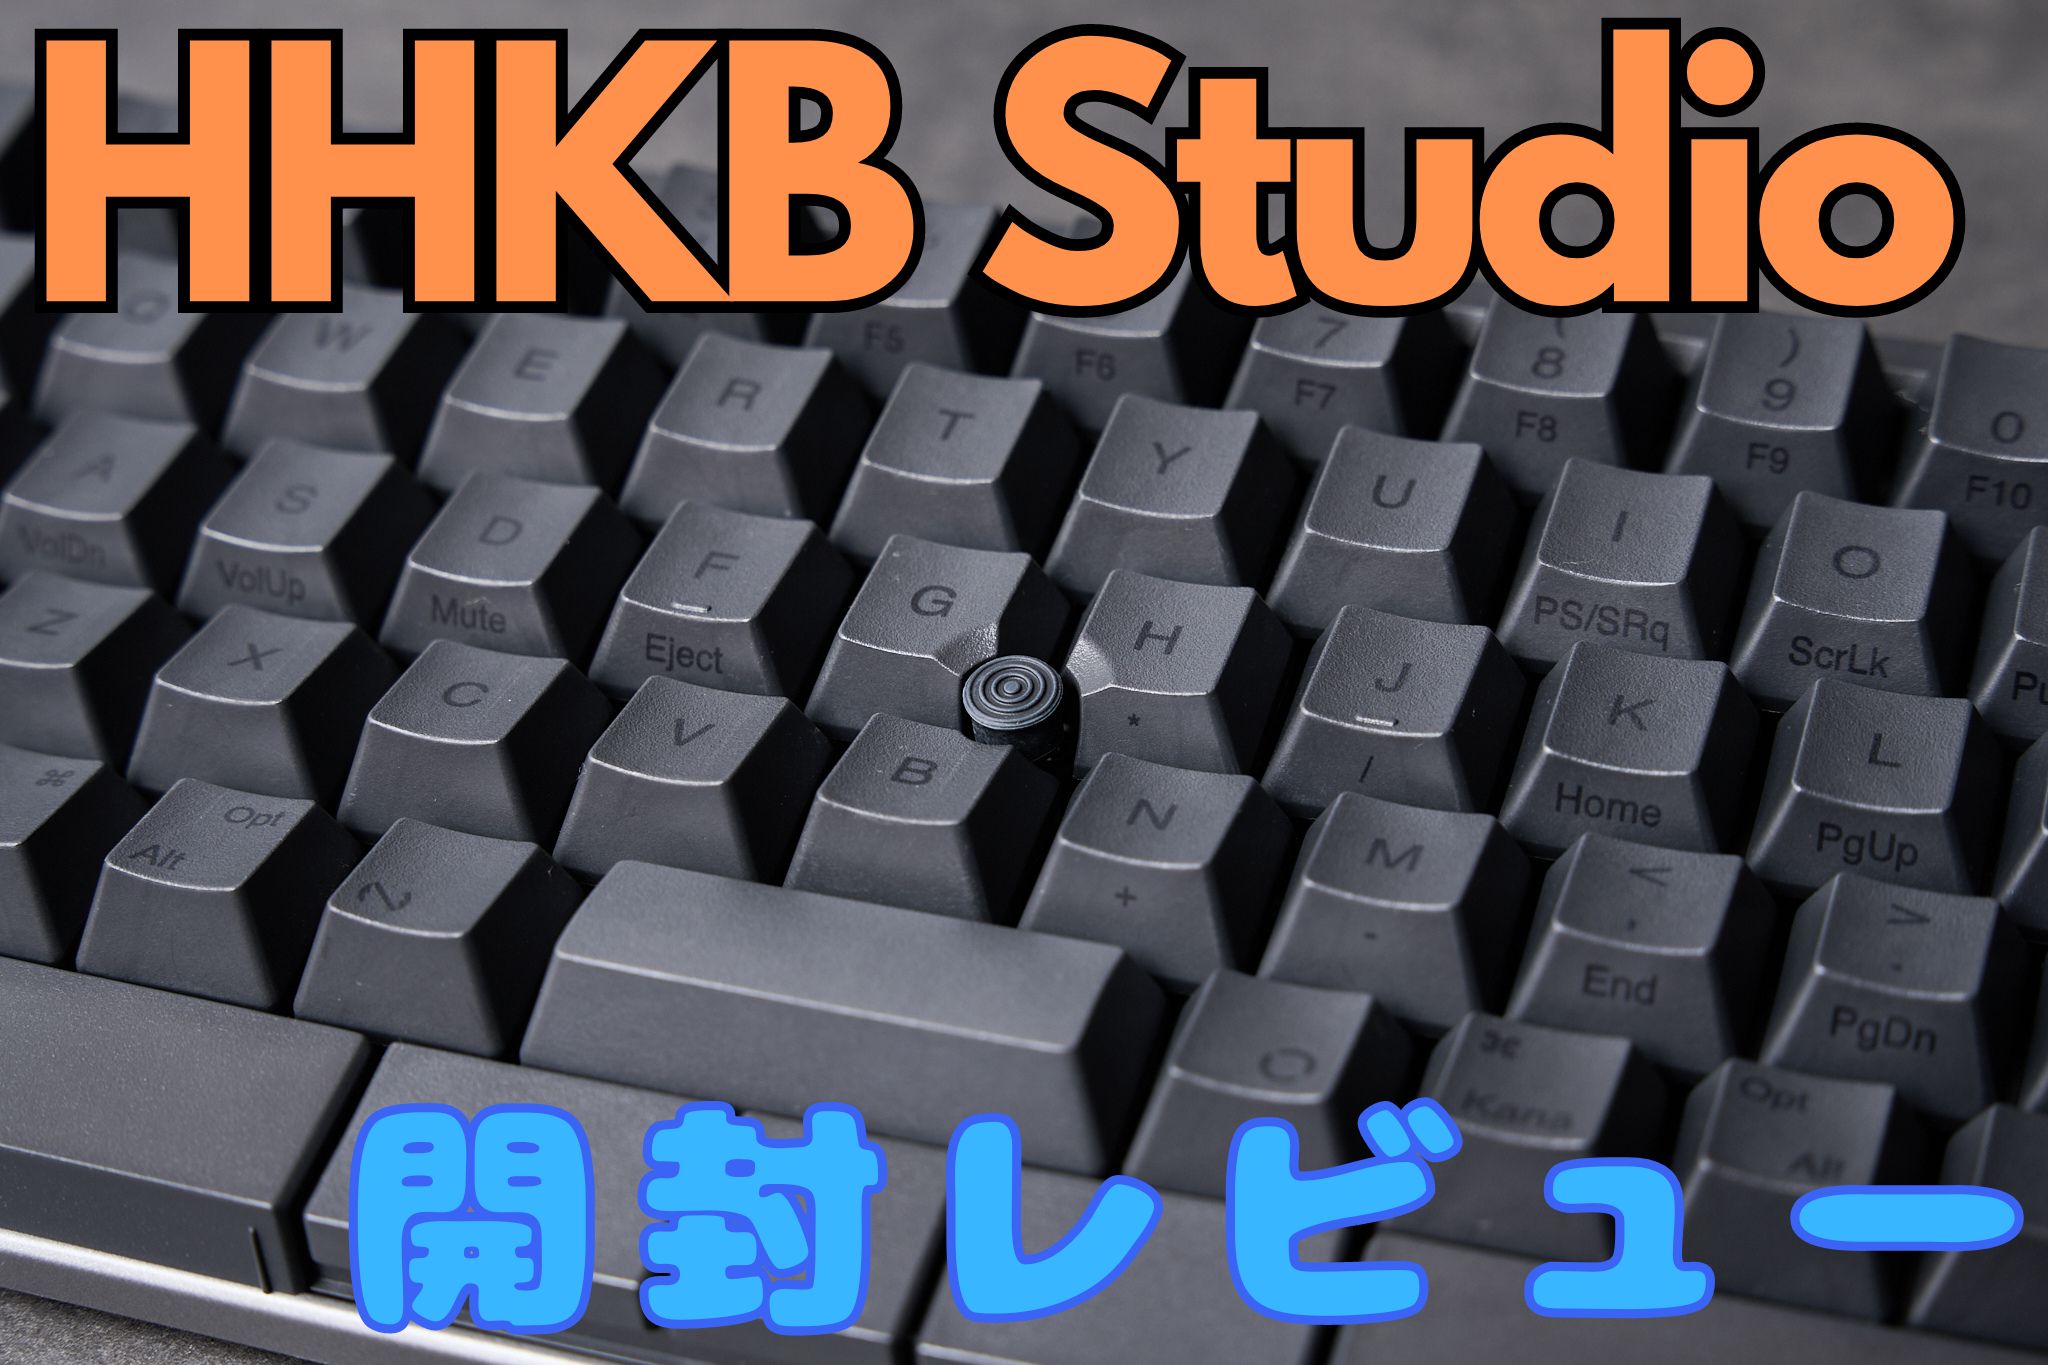 HHKB studio 日本語配列 - PC周辺機器